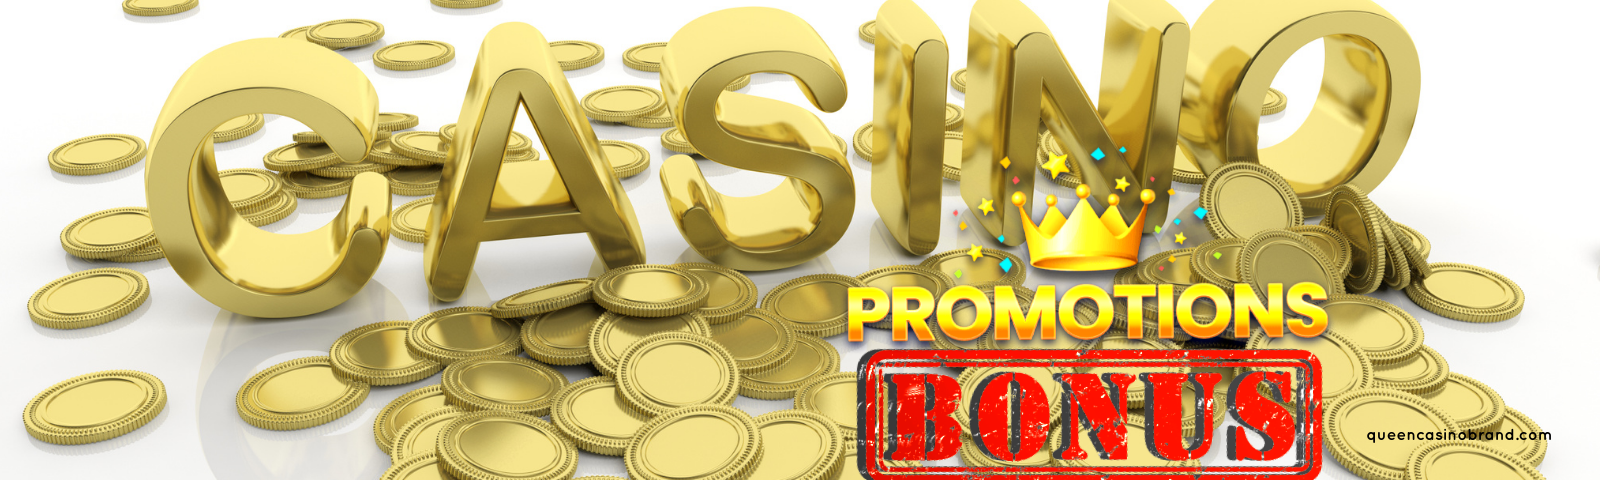 Best Online Casino Promotions and Bonuses 2023 | Queen Casino Brand